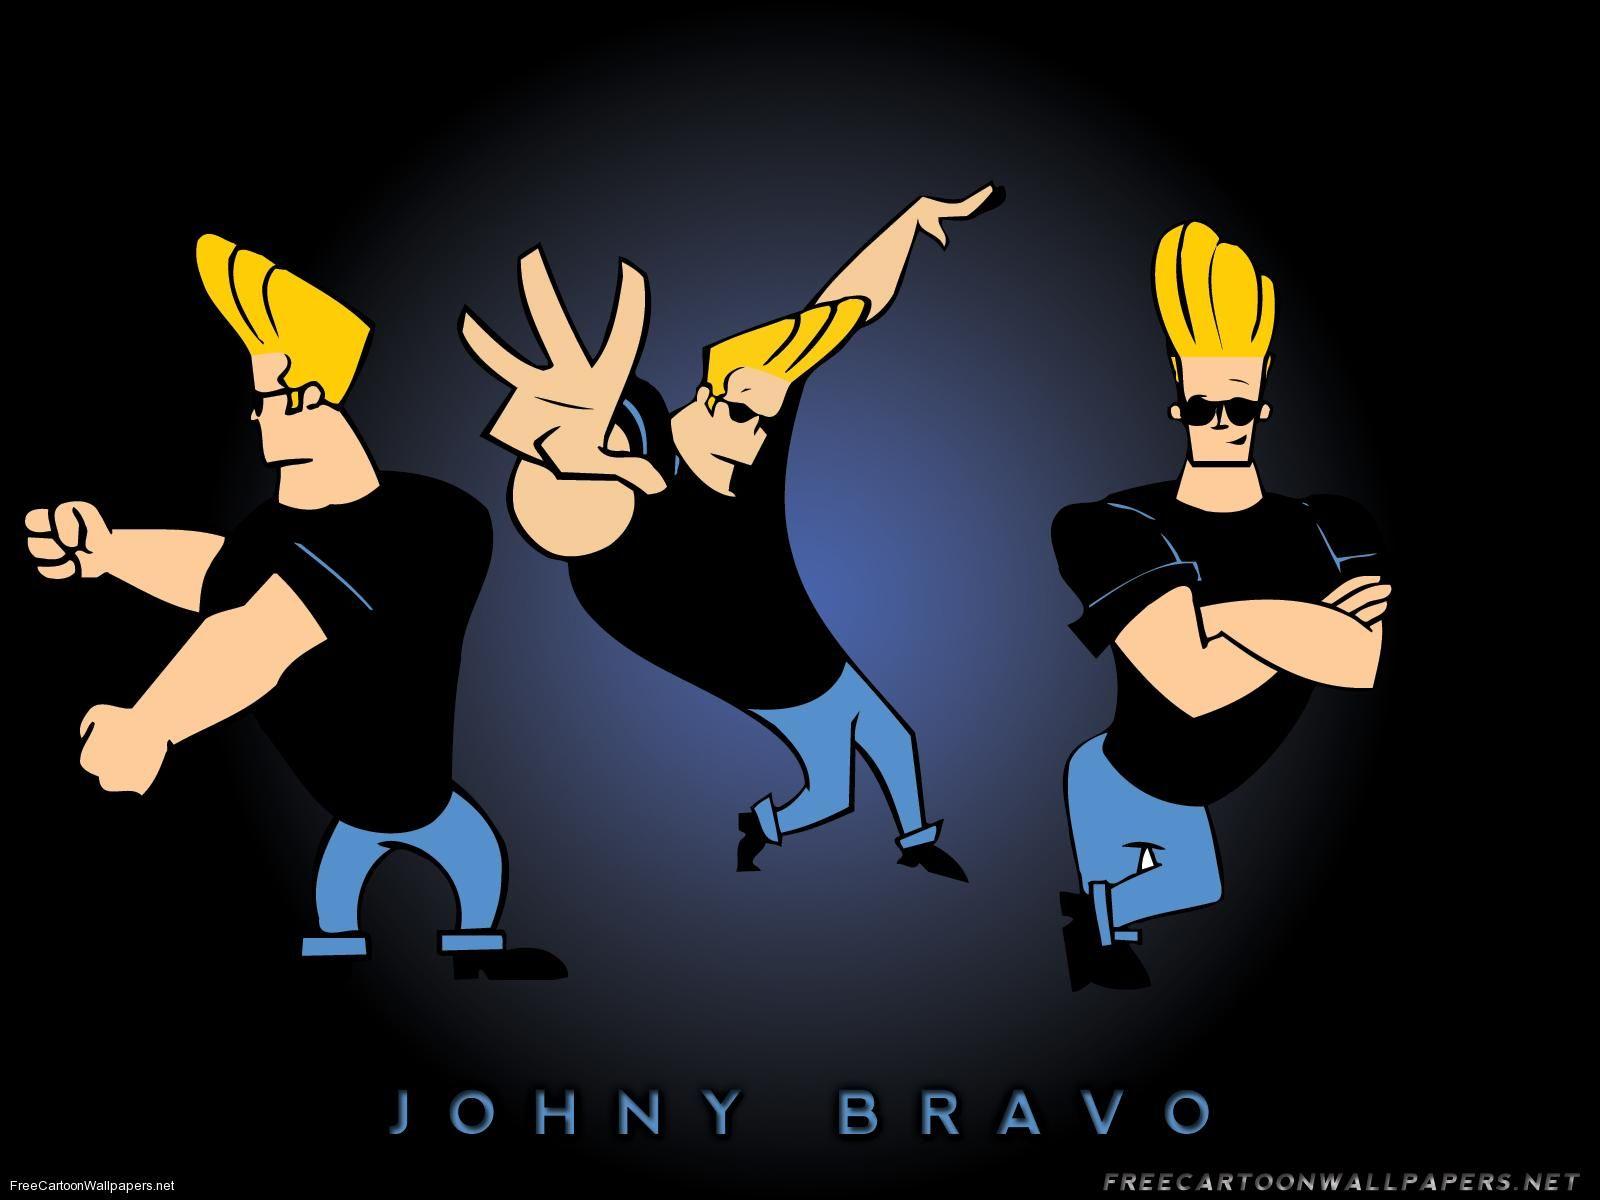 Johnny Bravo Wallpaper and Background Imagex1200